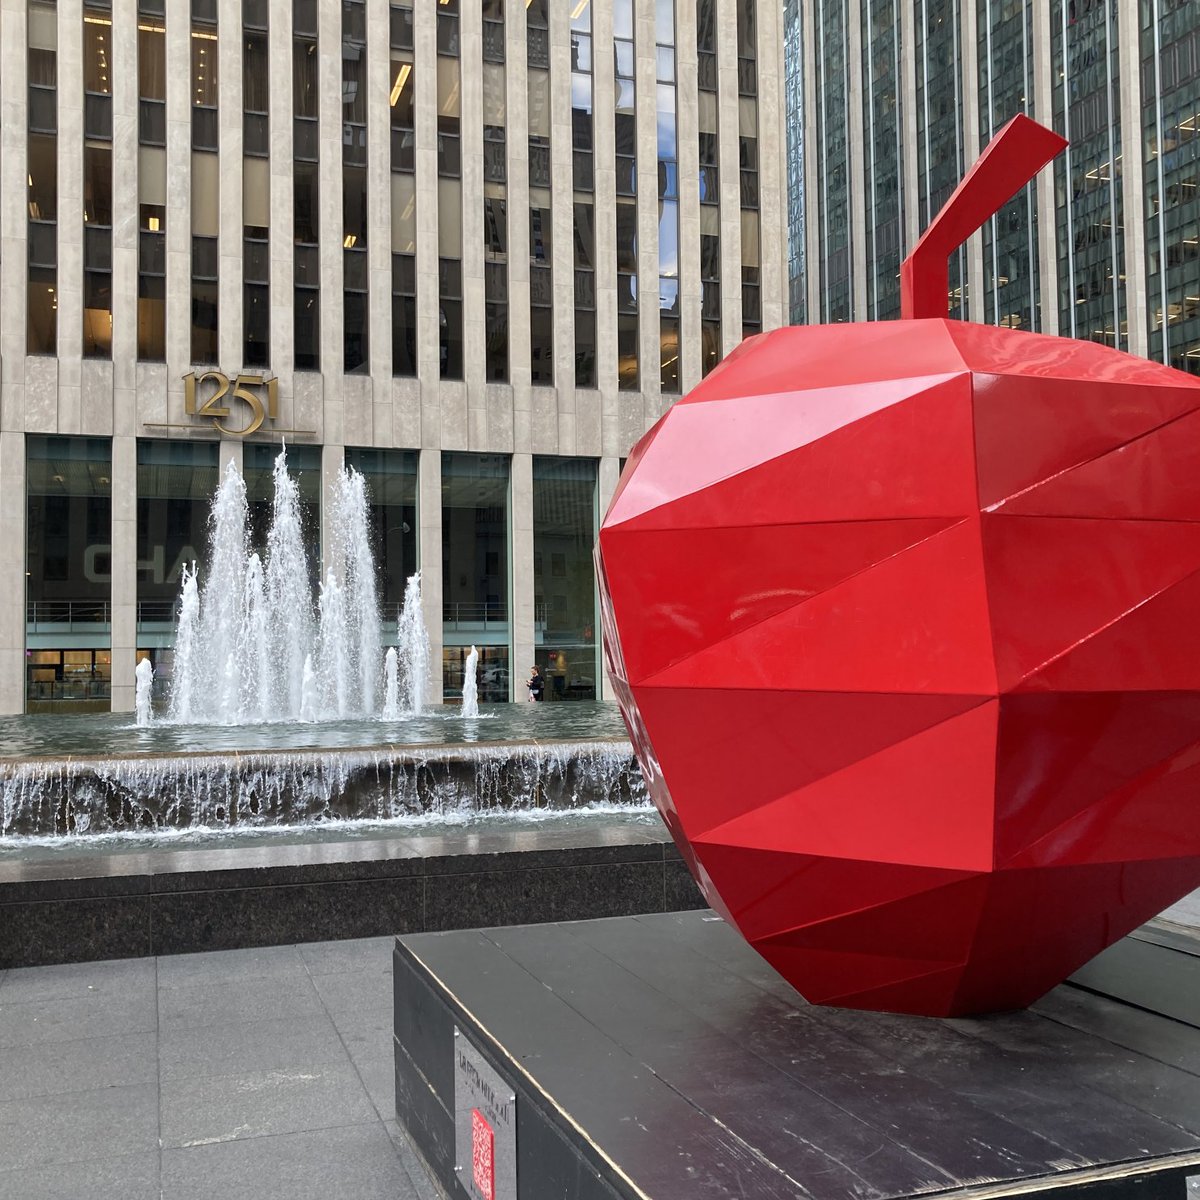 Fountain in front of 1251 Avenue of the Americas, Rockefeller Center ⛲️

La Gran Manzana sculpture by artist Enrique Cabrera 🍎

#NYC #FountainFriday #Fountain #BigApple #Art